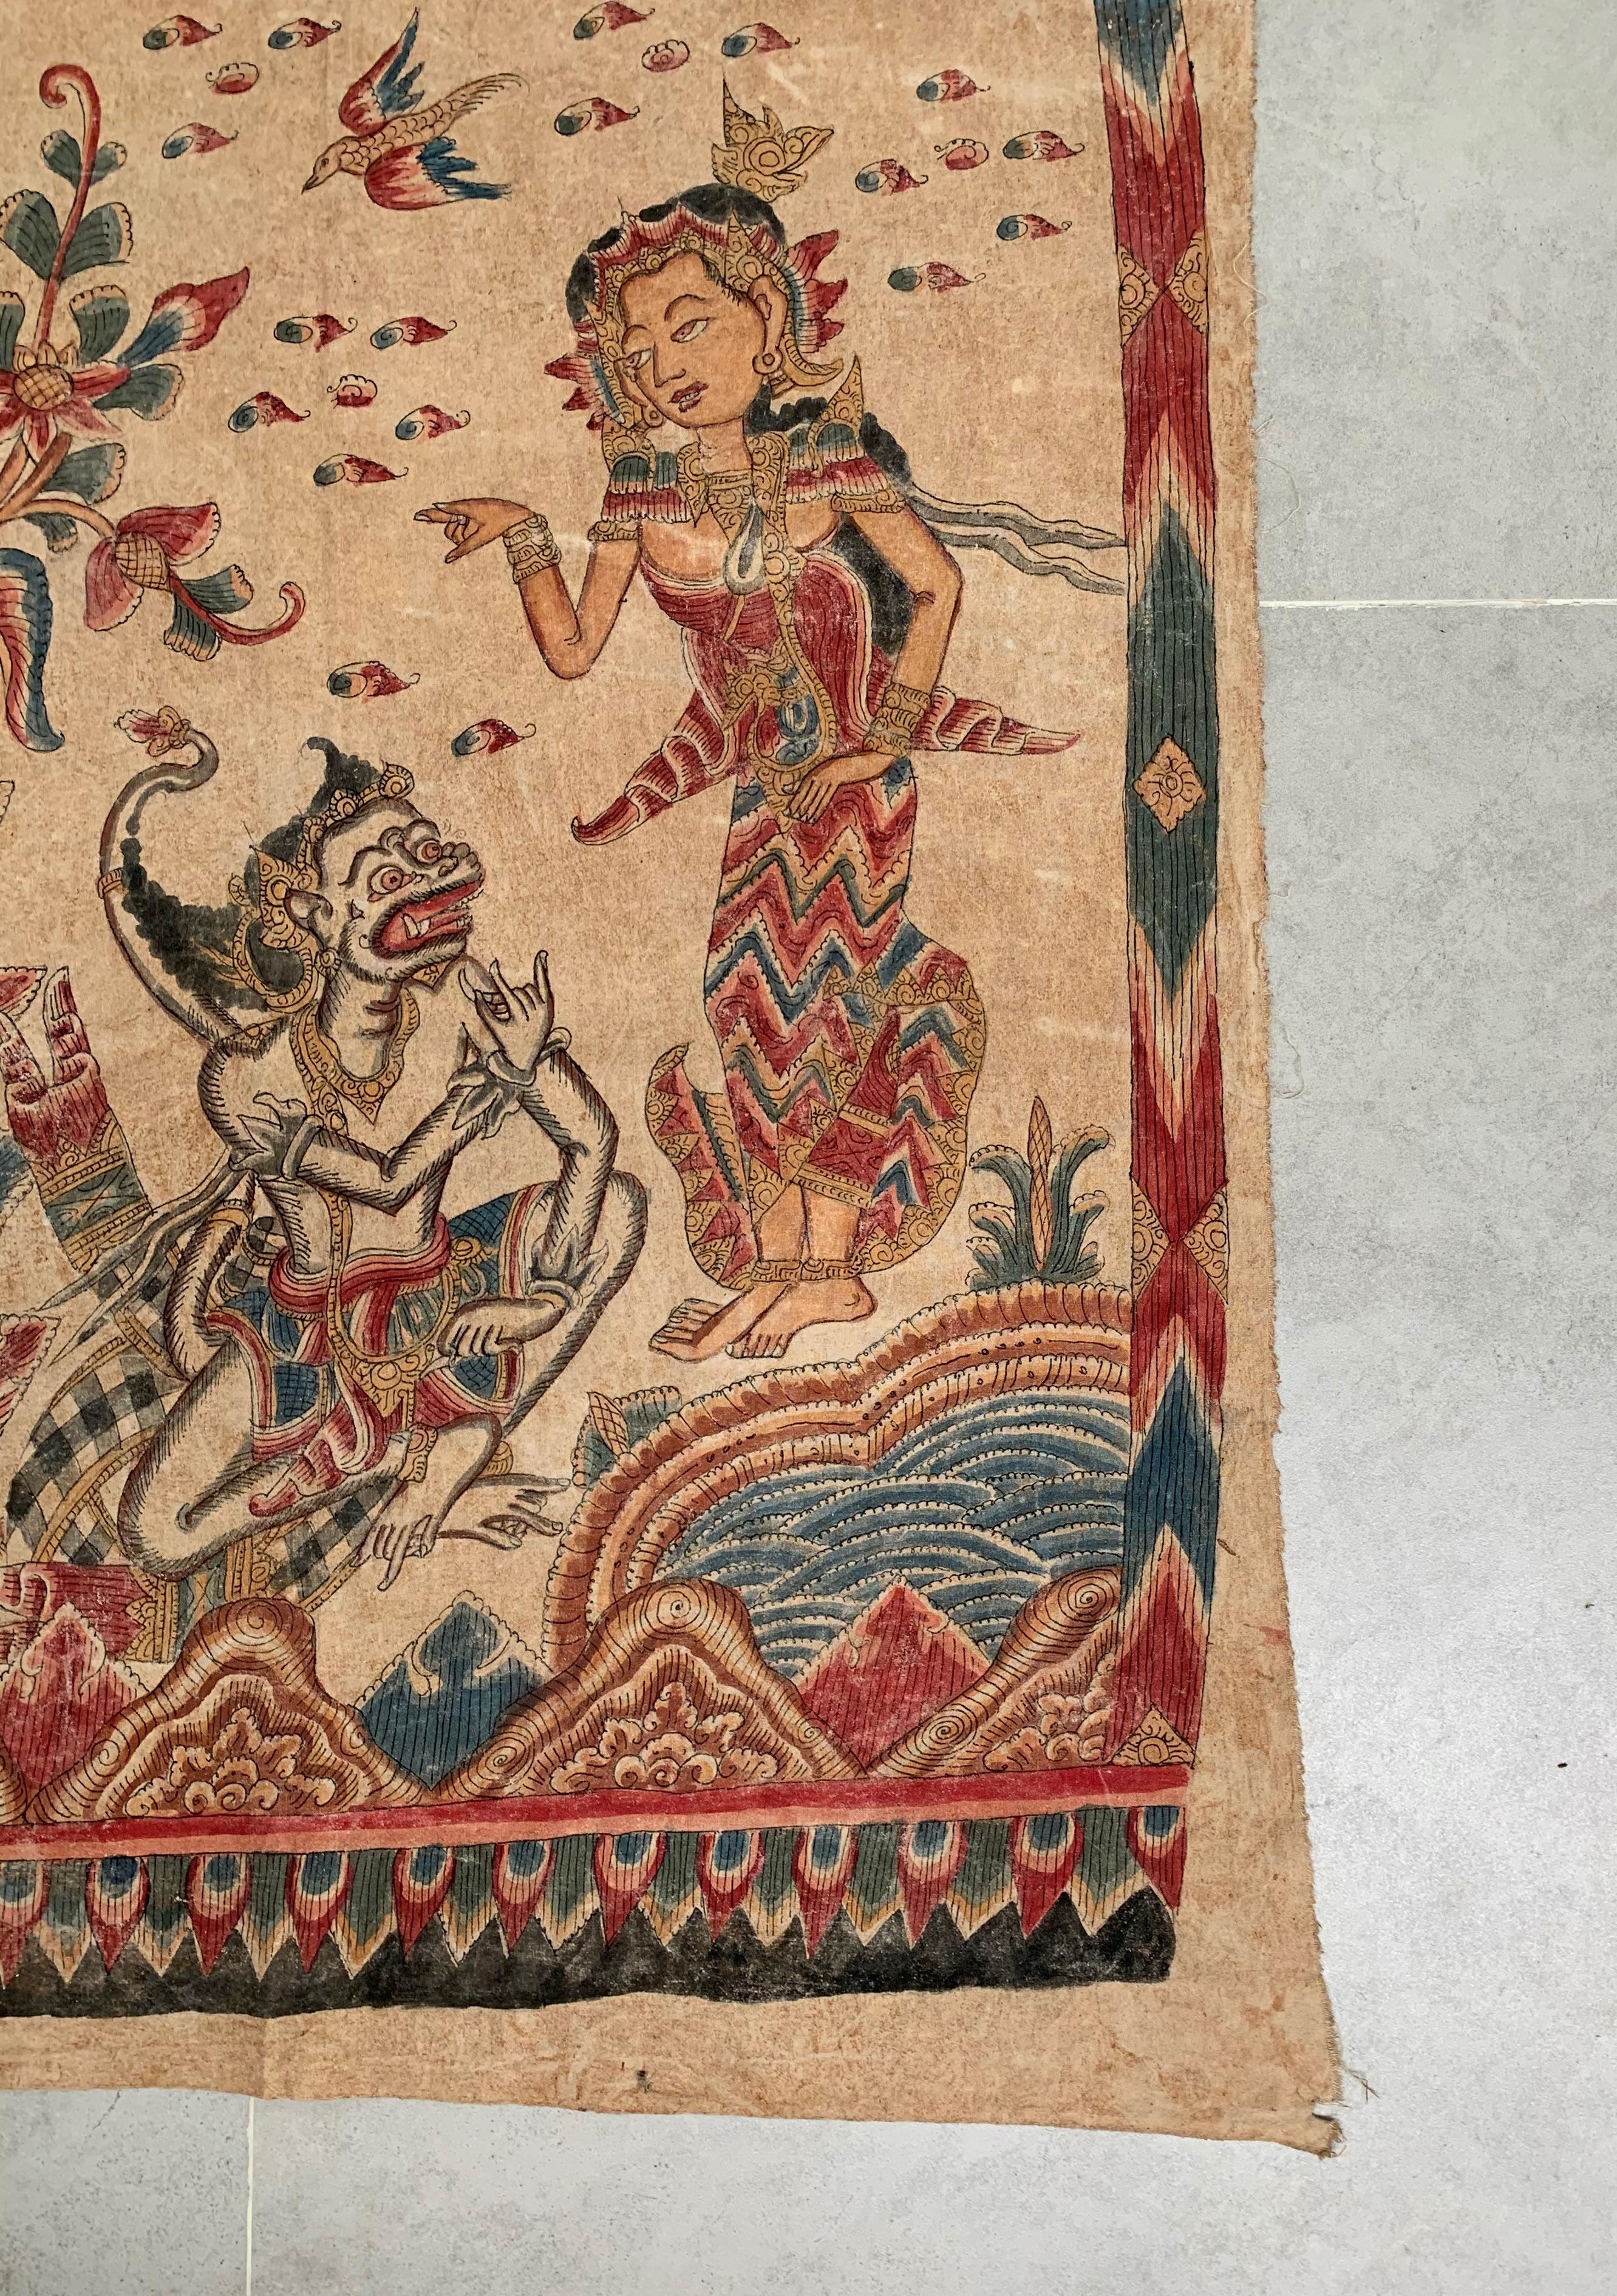 Hand-Painted Bali Hindu Textile 'Kamasan' Painting, Indonesia, Early 20th Century